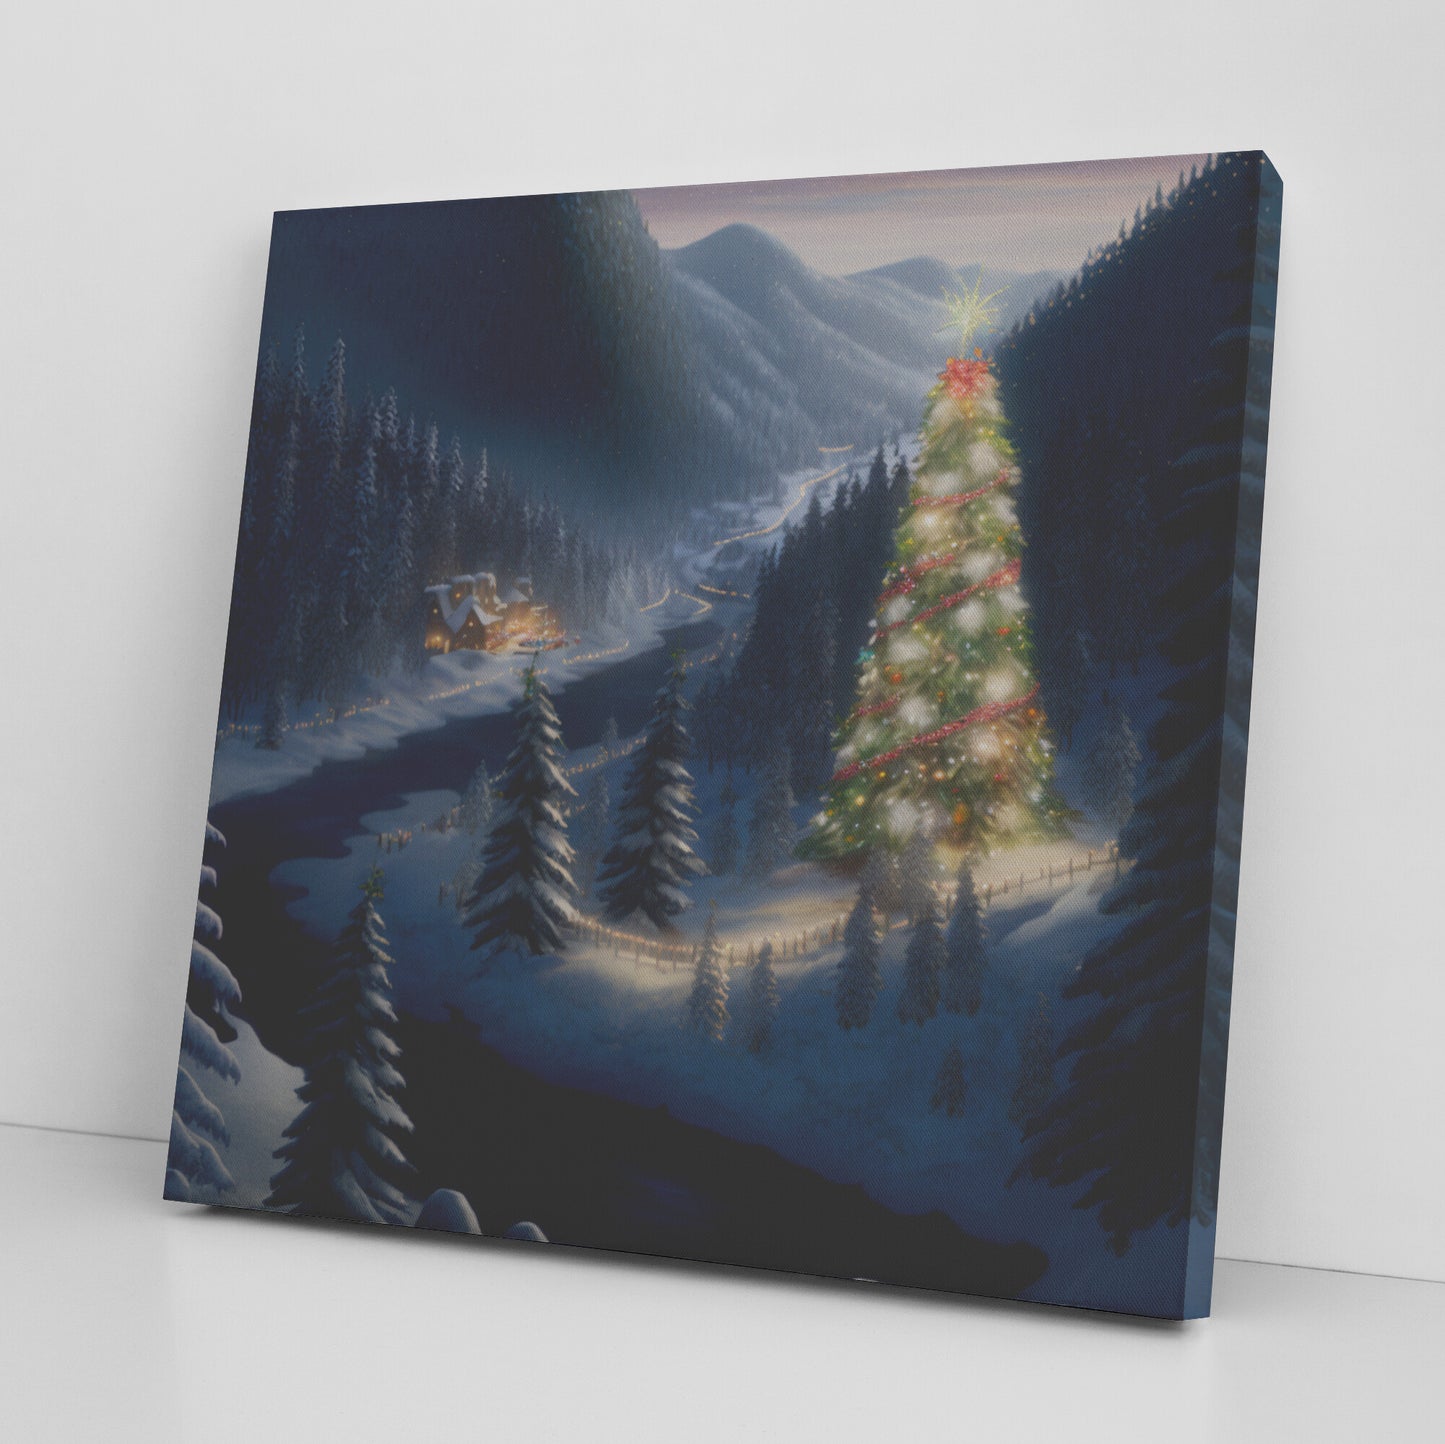 Christmas Oil Painting, Mountain Christmas Tree Landscape Painting, Christmas Wall Decor